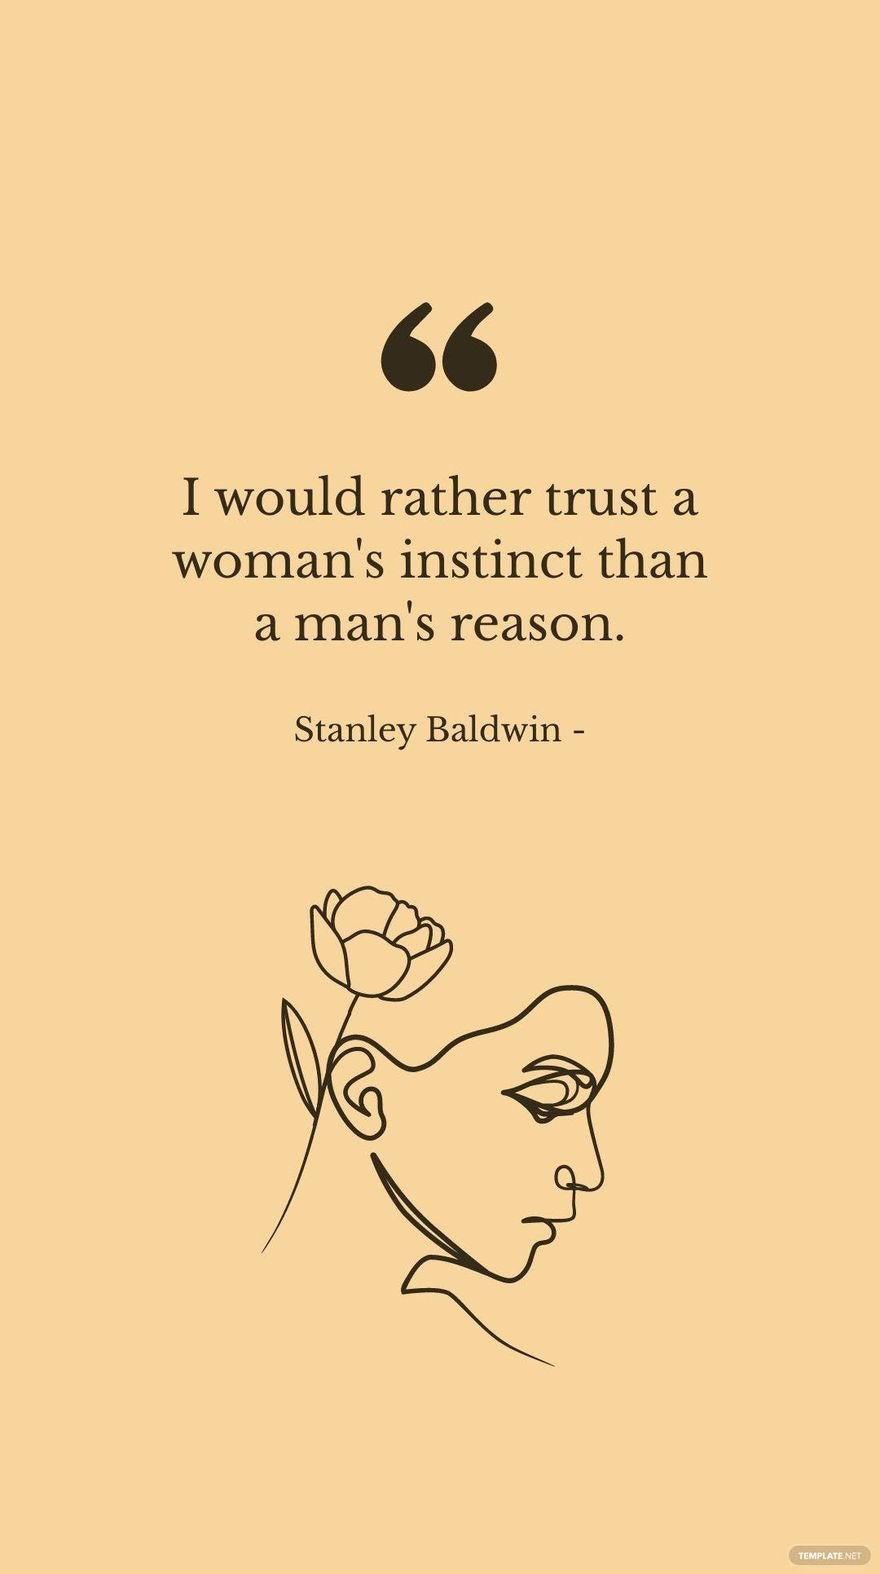 Stanley Baldwin - I would rather trust a woman's instinct than a man's reason.